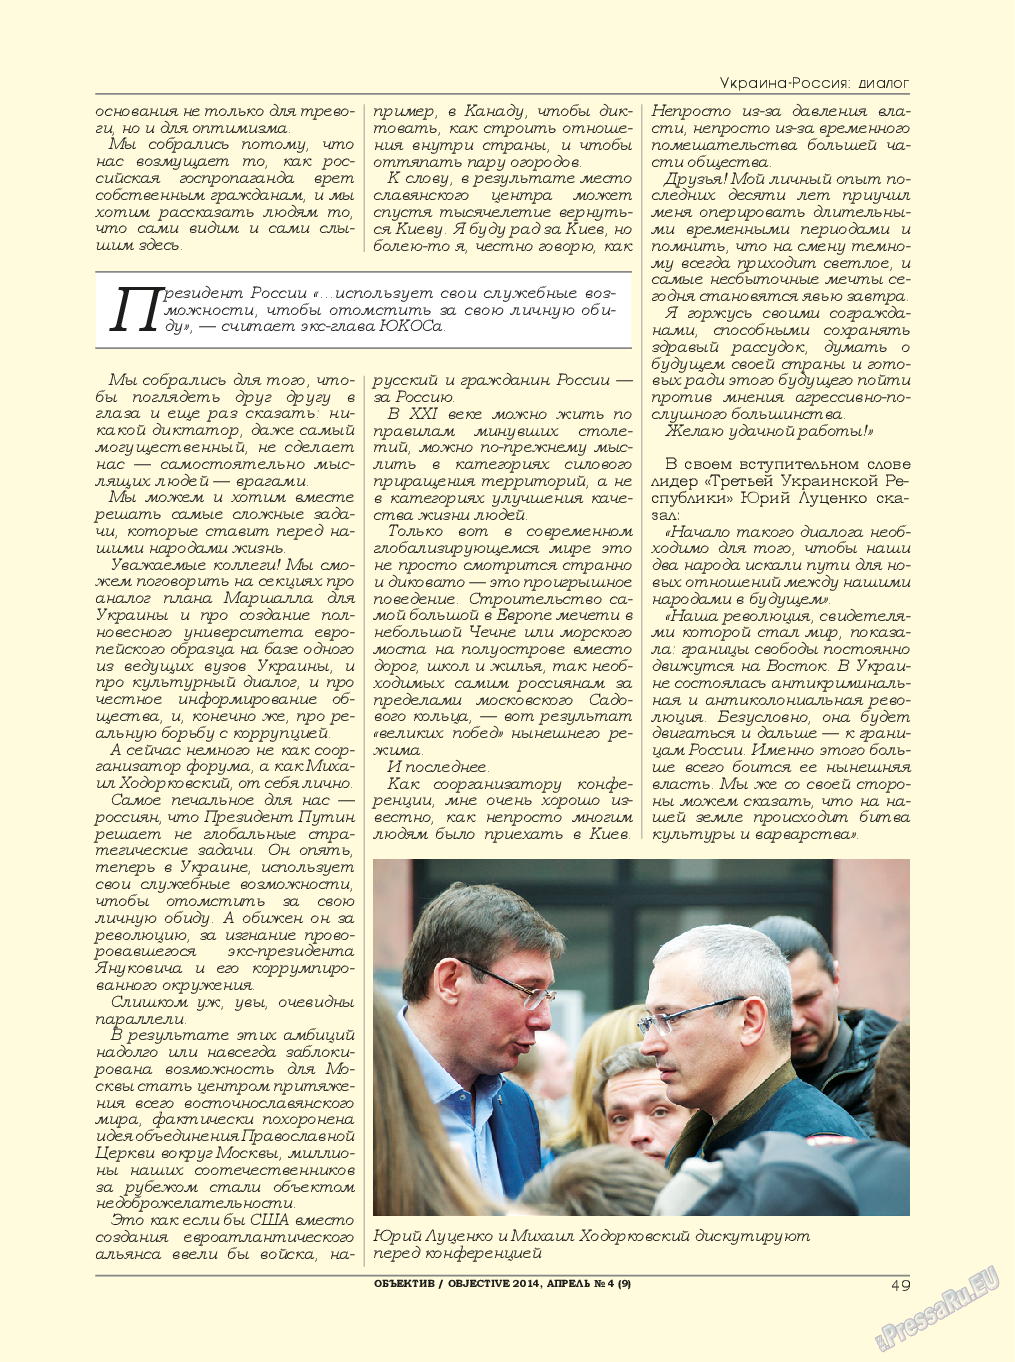 Объектив EU, журнал. 2014 №4 стр.49